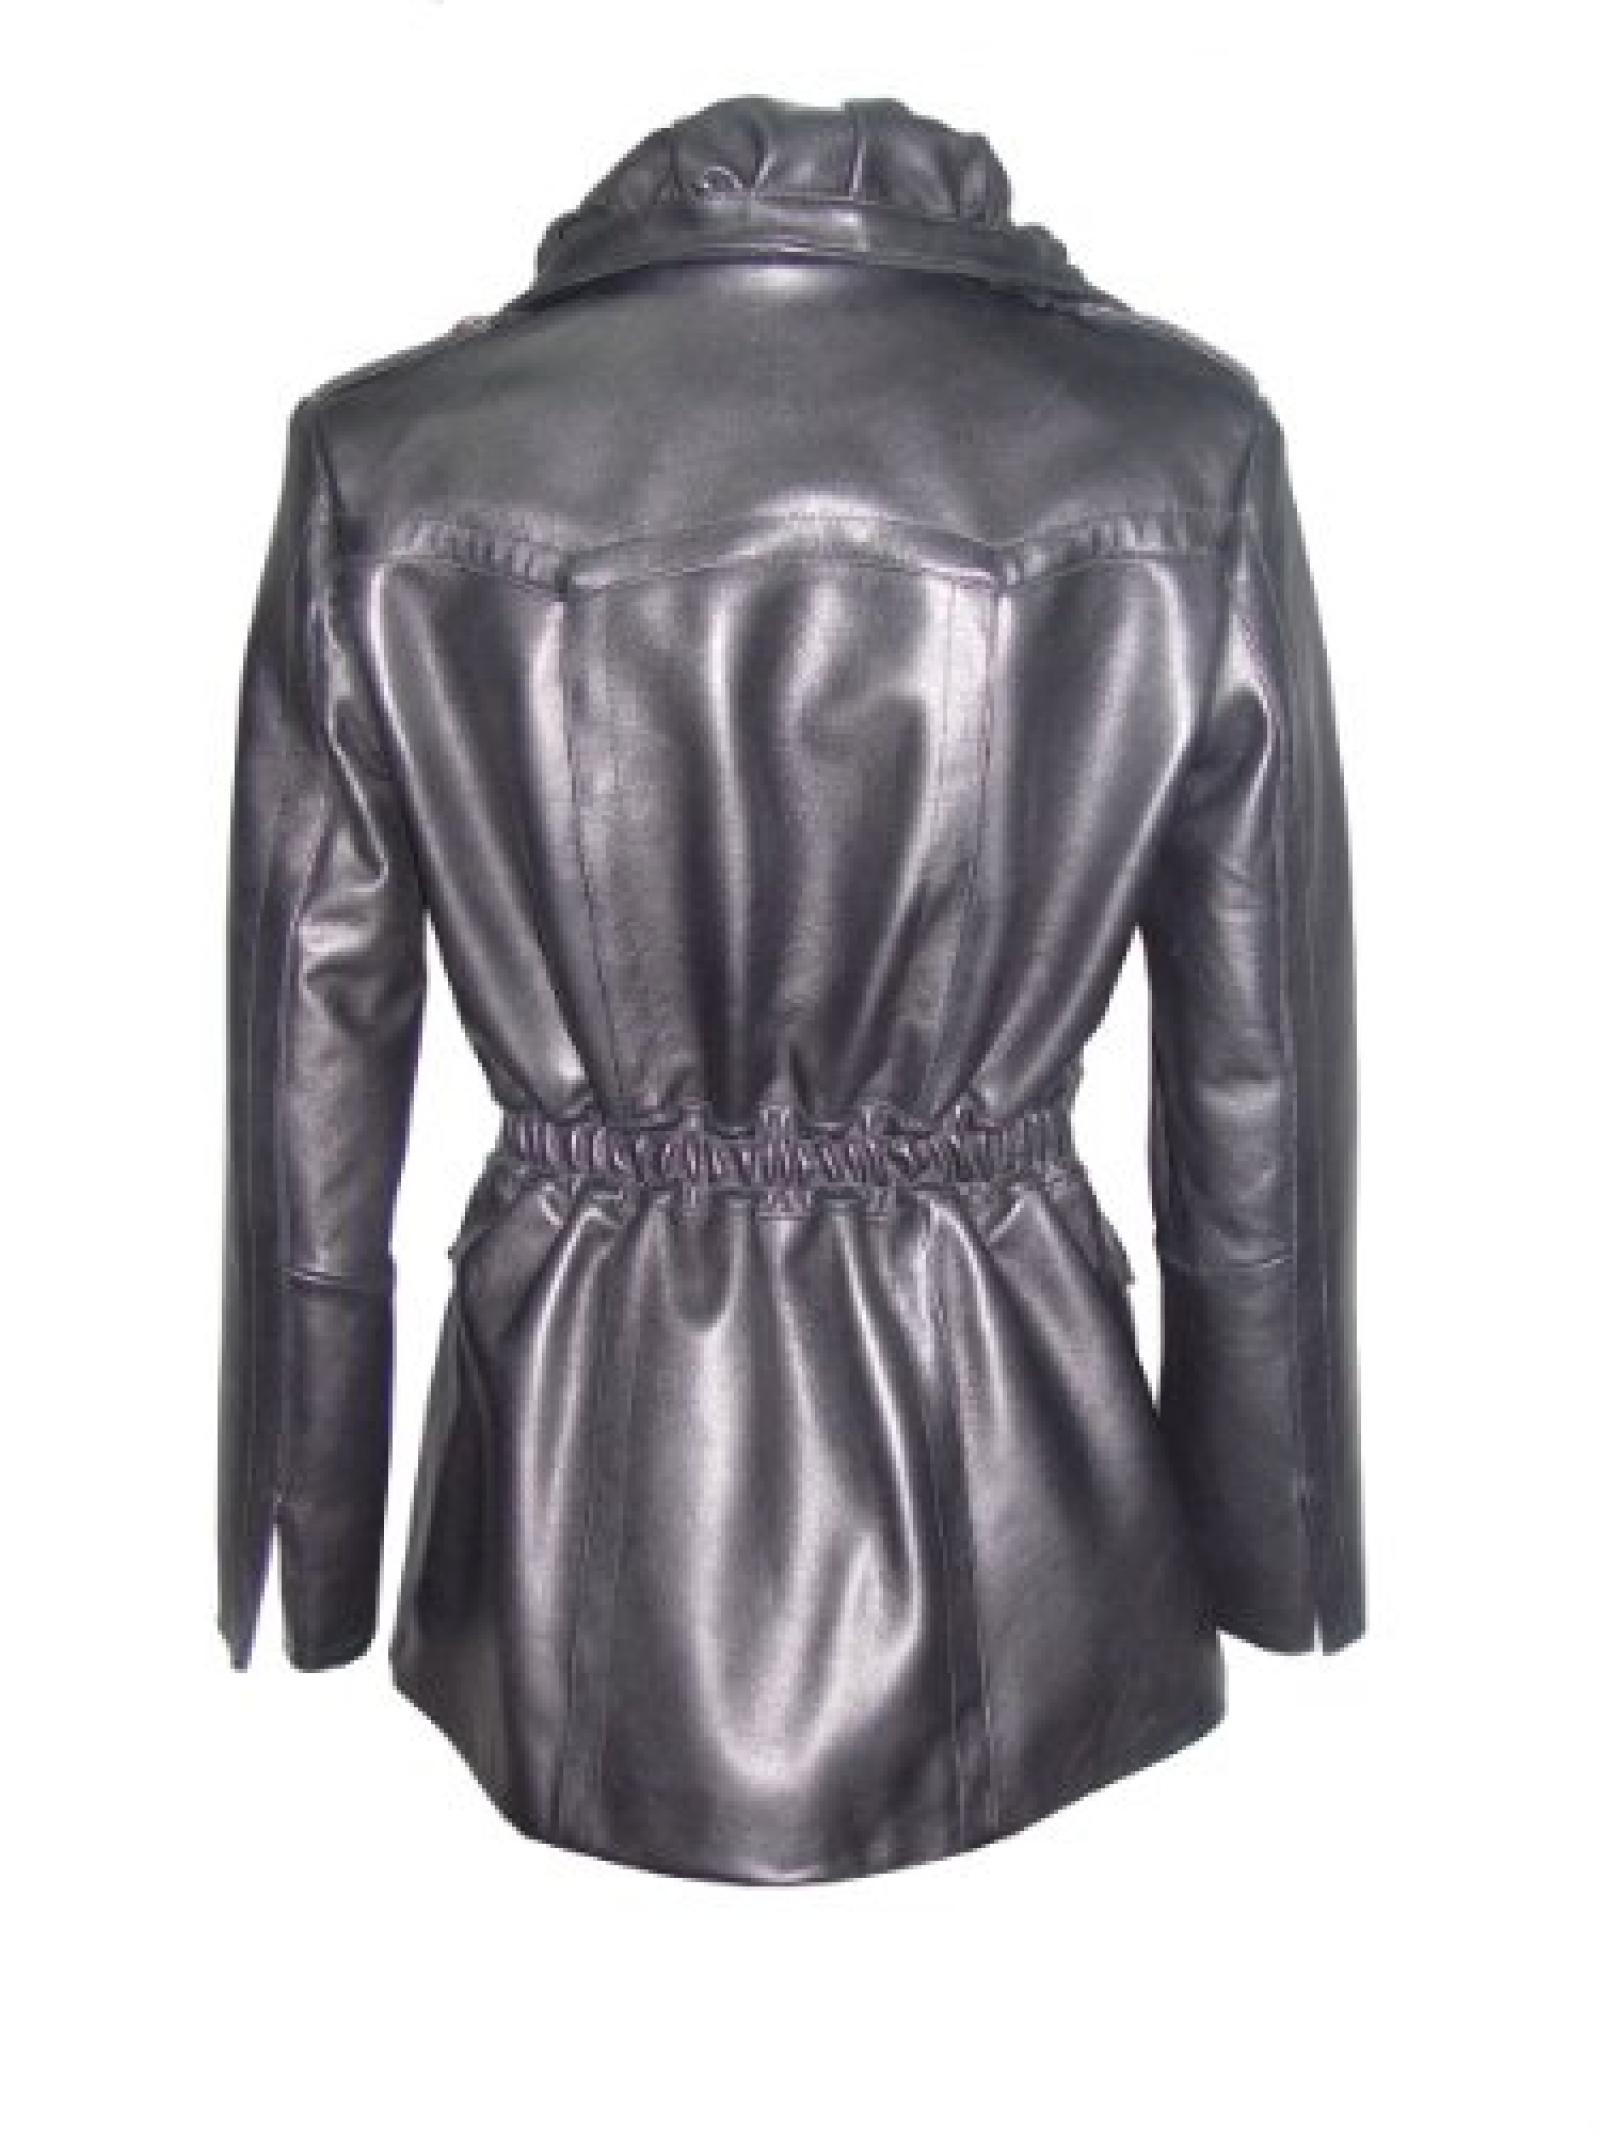 Nettailor Women 4185 Soft Leather Simple Easy Casual Long Jacket Fancy Collar 